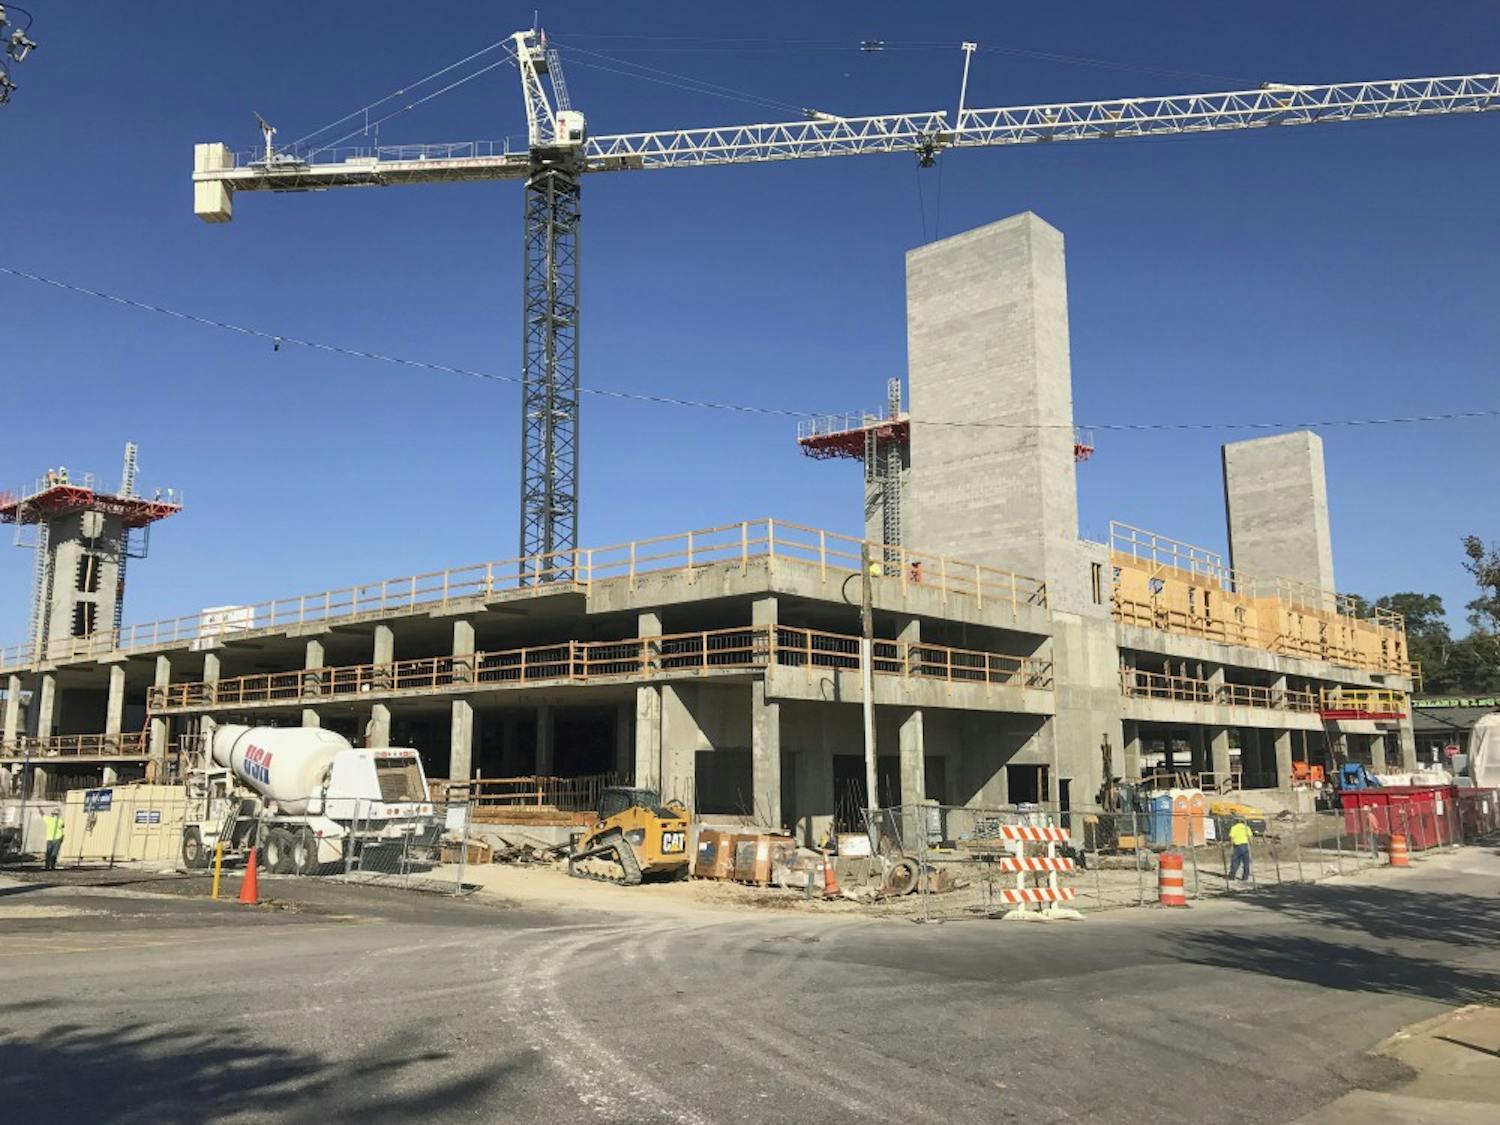 Construction underway on the Evolve Auburn apartments located at 200 W. Glenn Ave. on&nbsp;Tuesday, Oct 18, 2016, in Auburn, Ala.&nbsp;